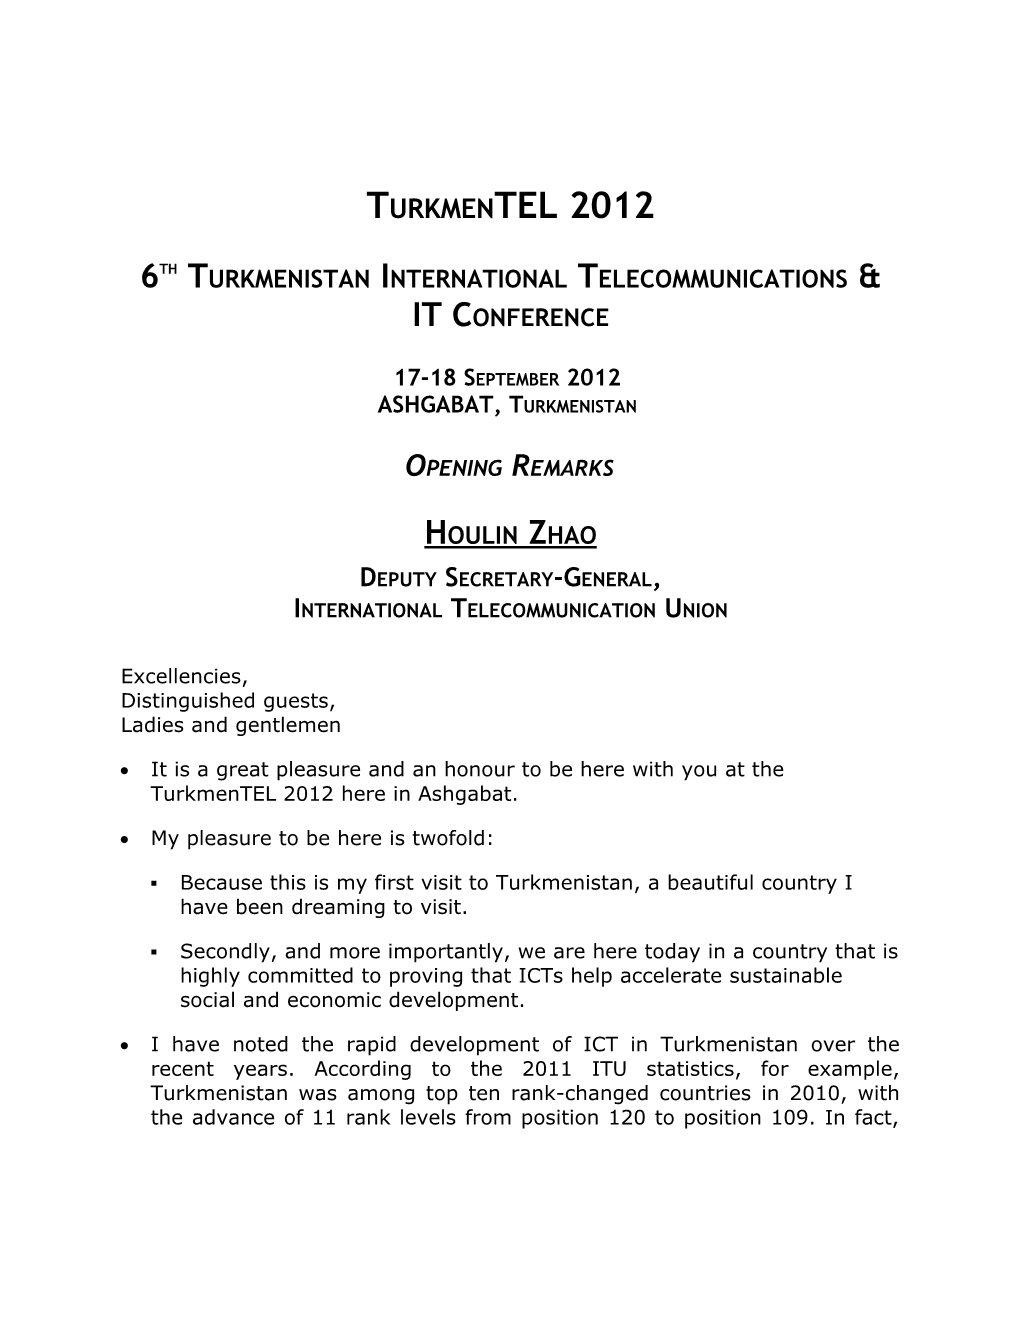 6Th Turkmenistan International Telecommunications & IT Conference